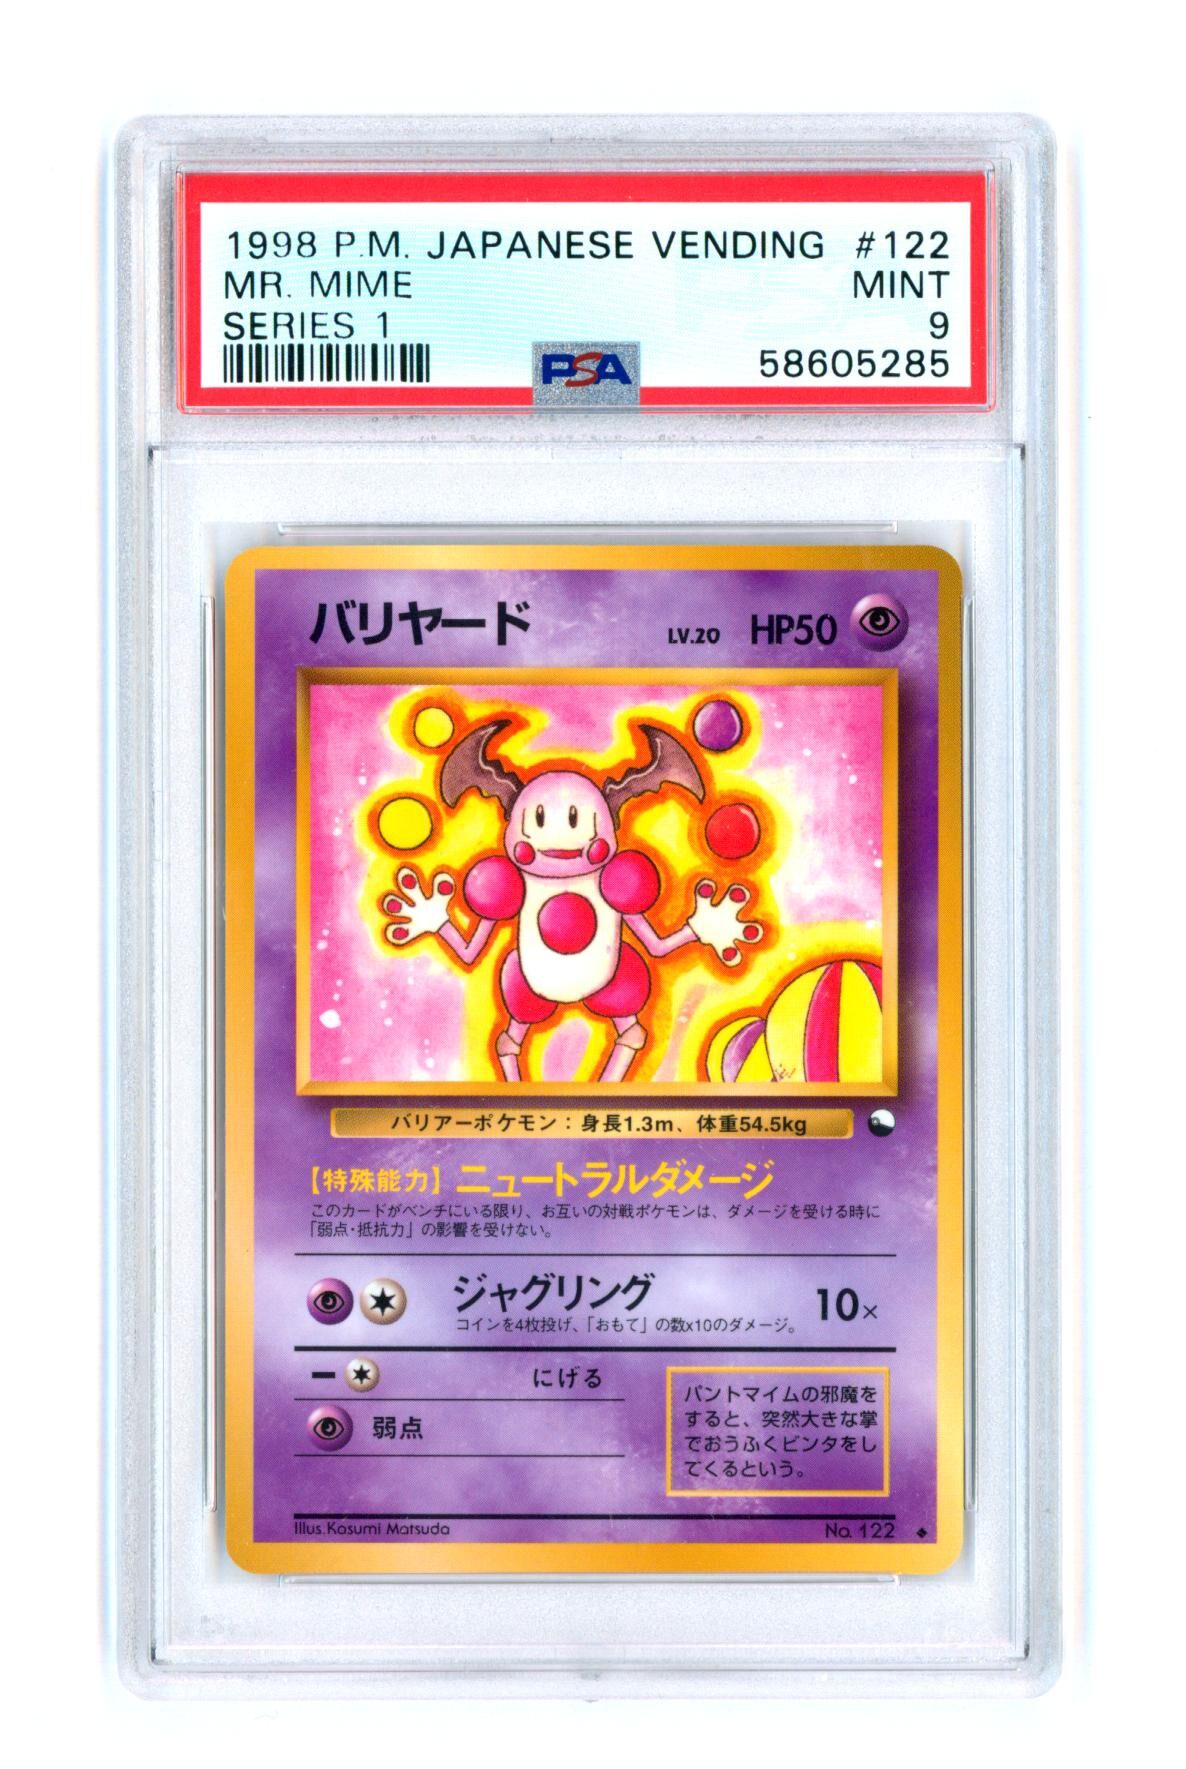 Mr. Mime #122 - Series 1 - Japanese Vending - PSA 9 MINT - Pokémon